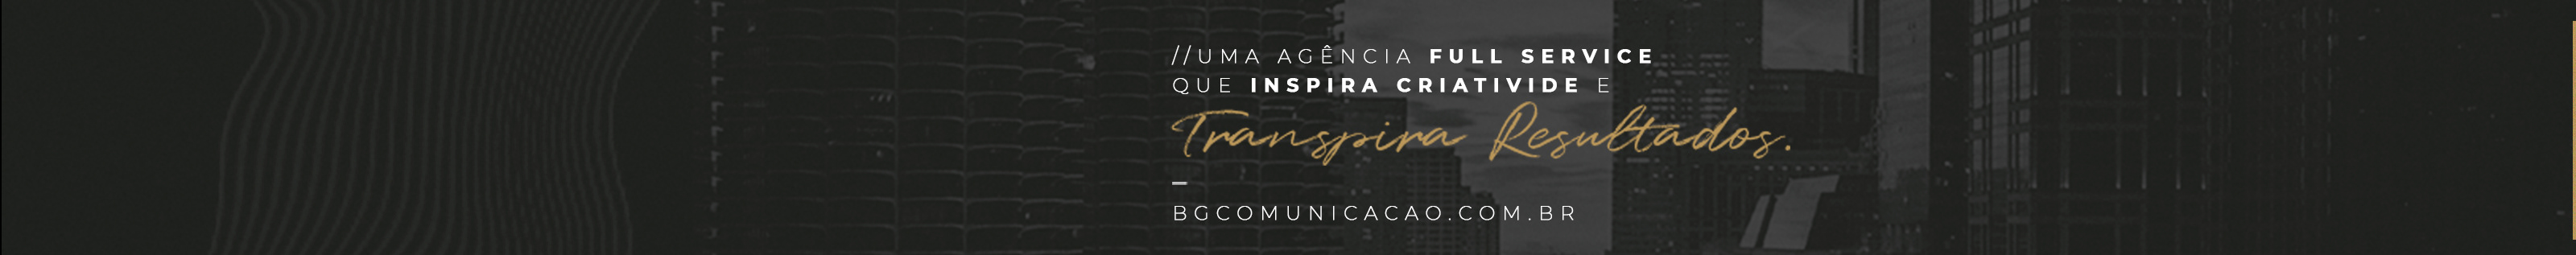 Agência BGCOM's profile banner